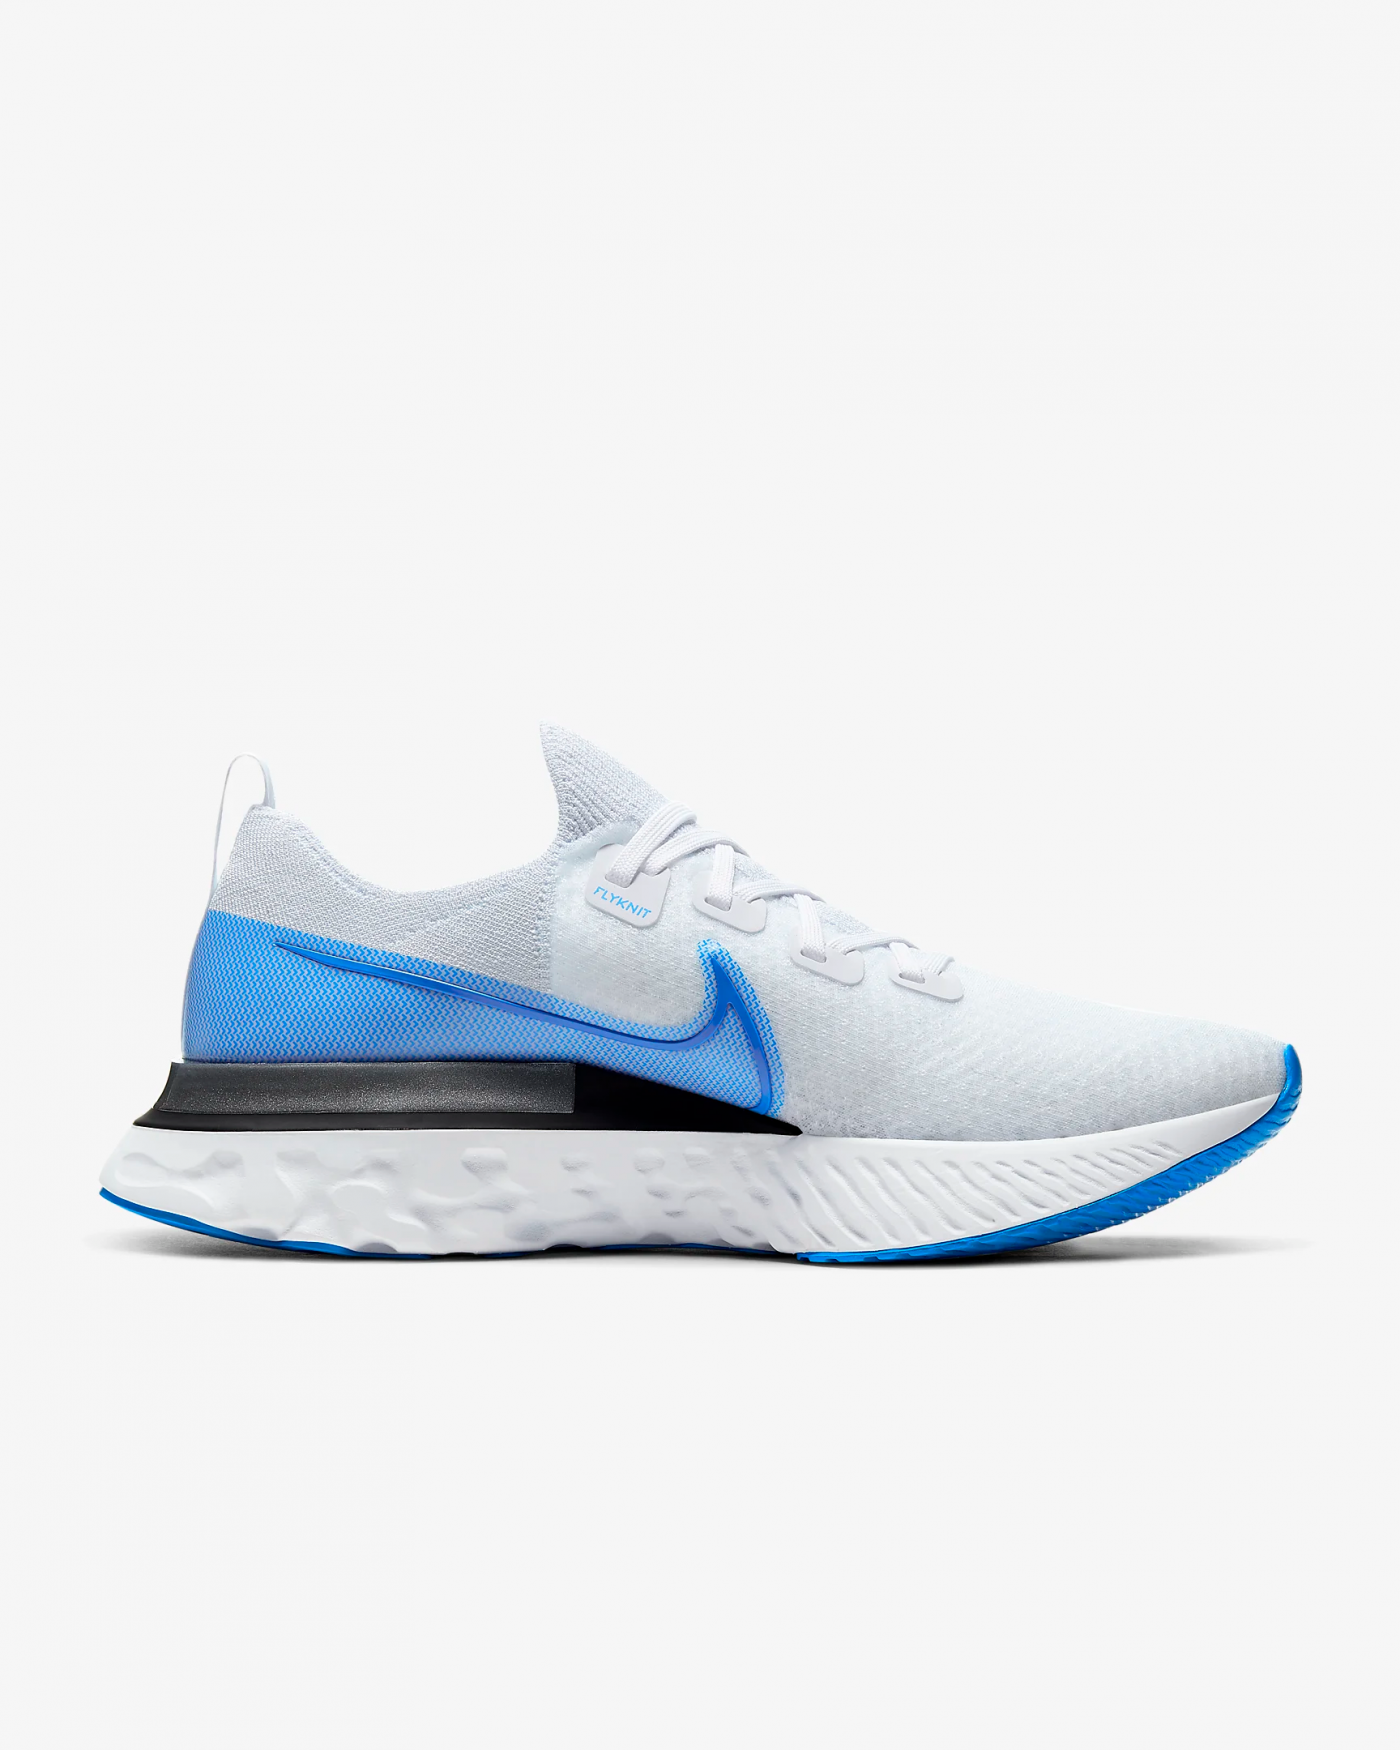 Nike-react-infinity-flyknit-blanc-bleu-3